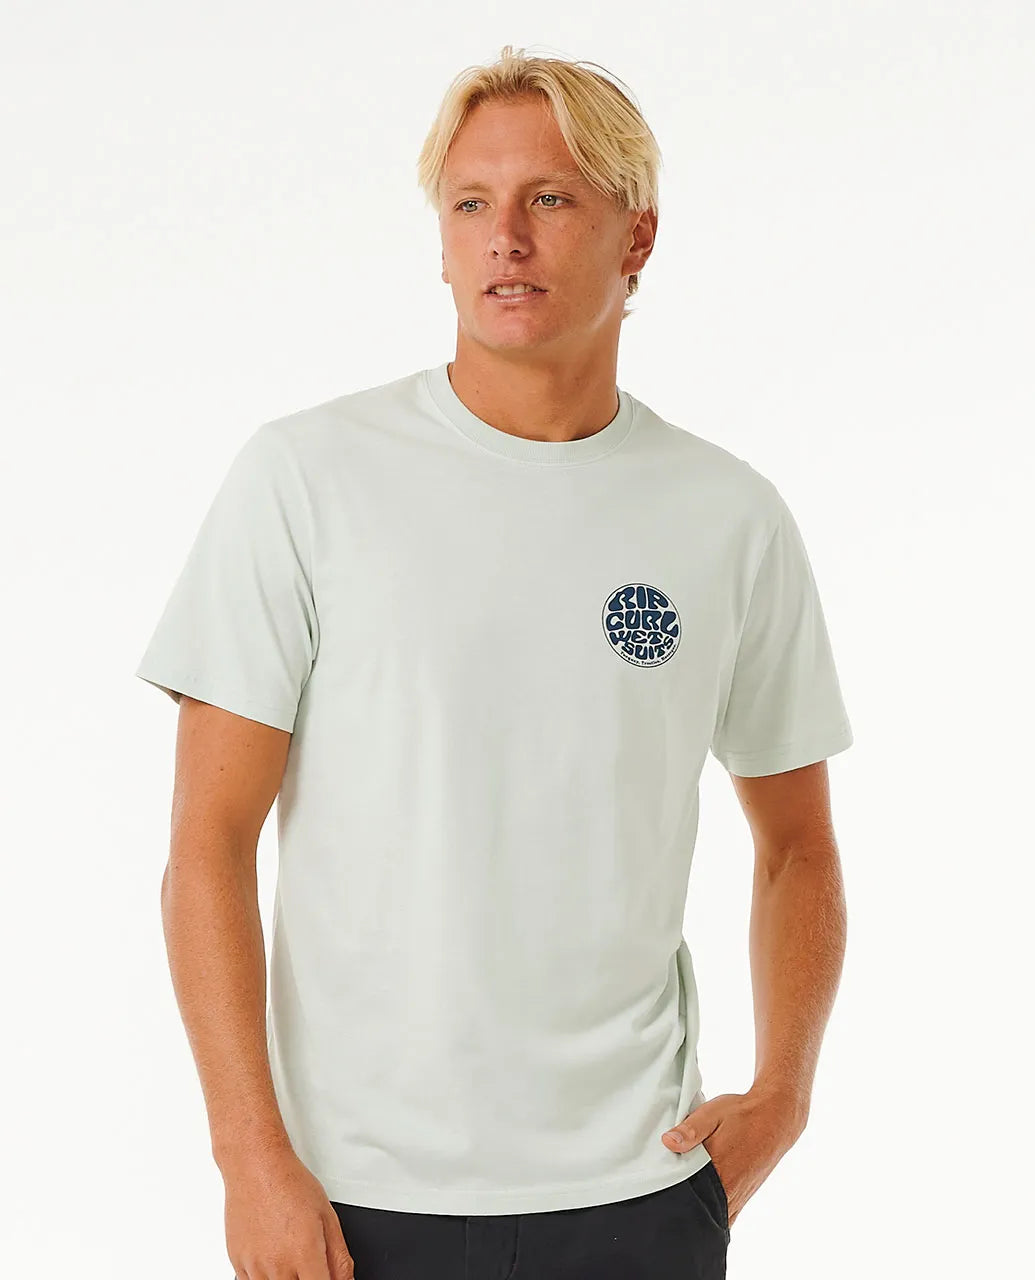 RipCurl Wetsuit Icon T-Shirt - Mint